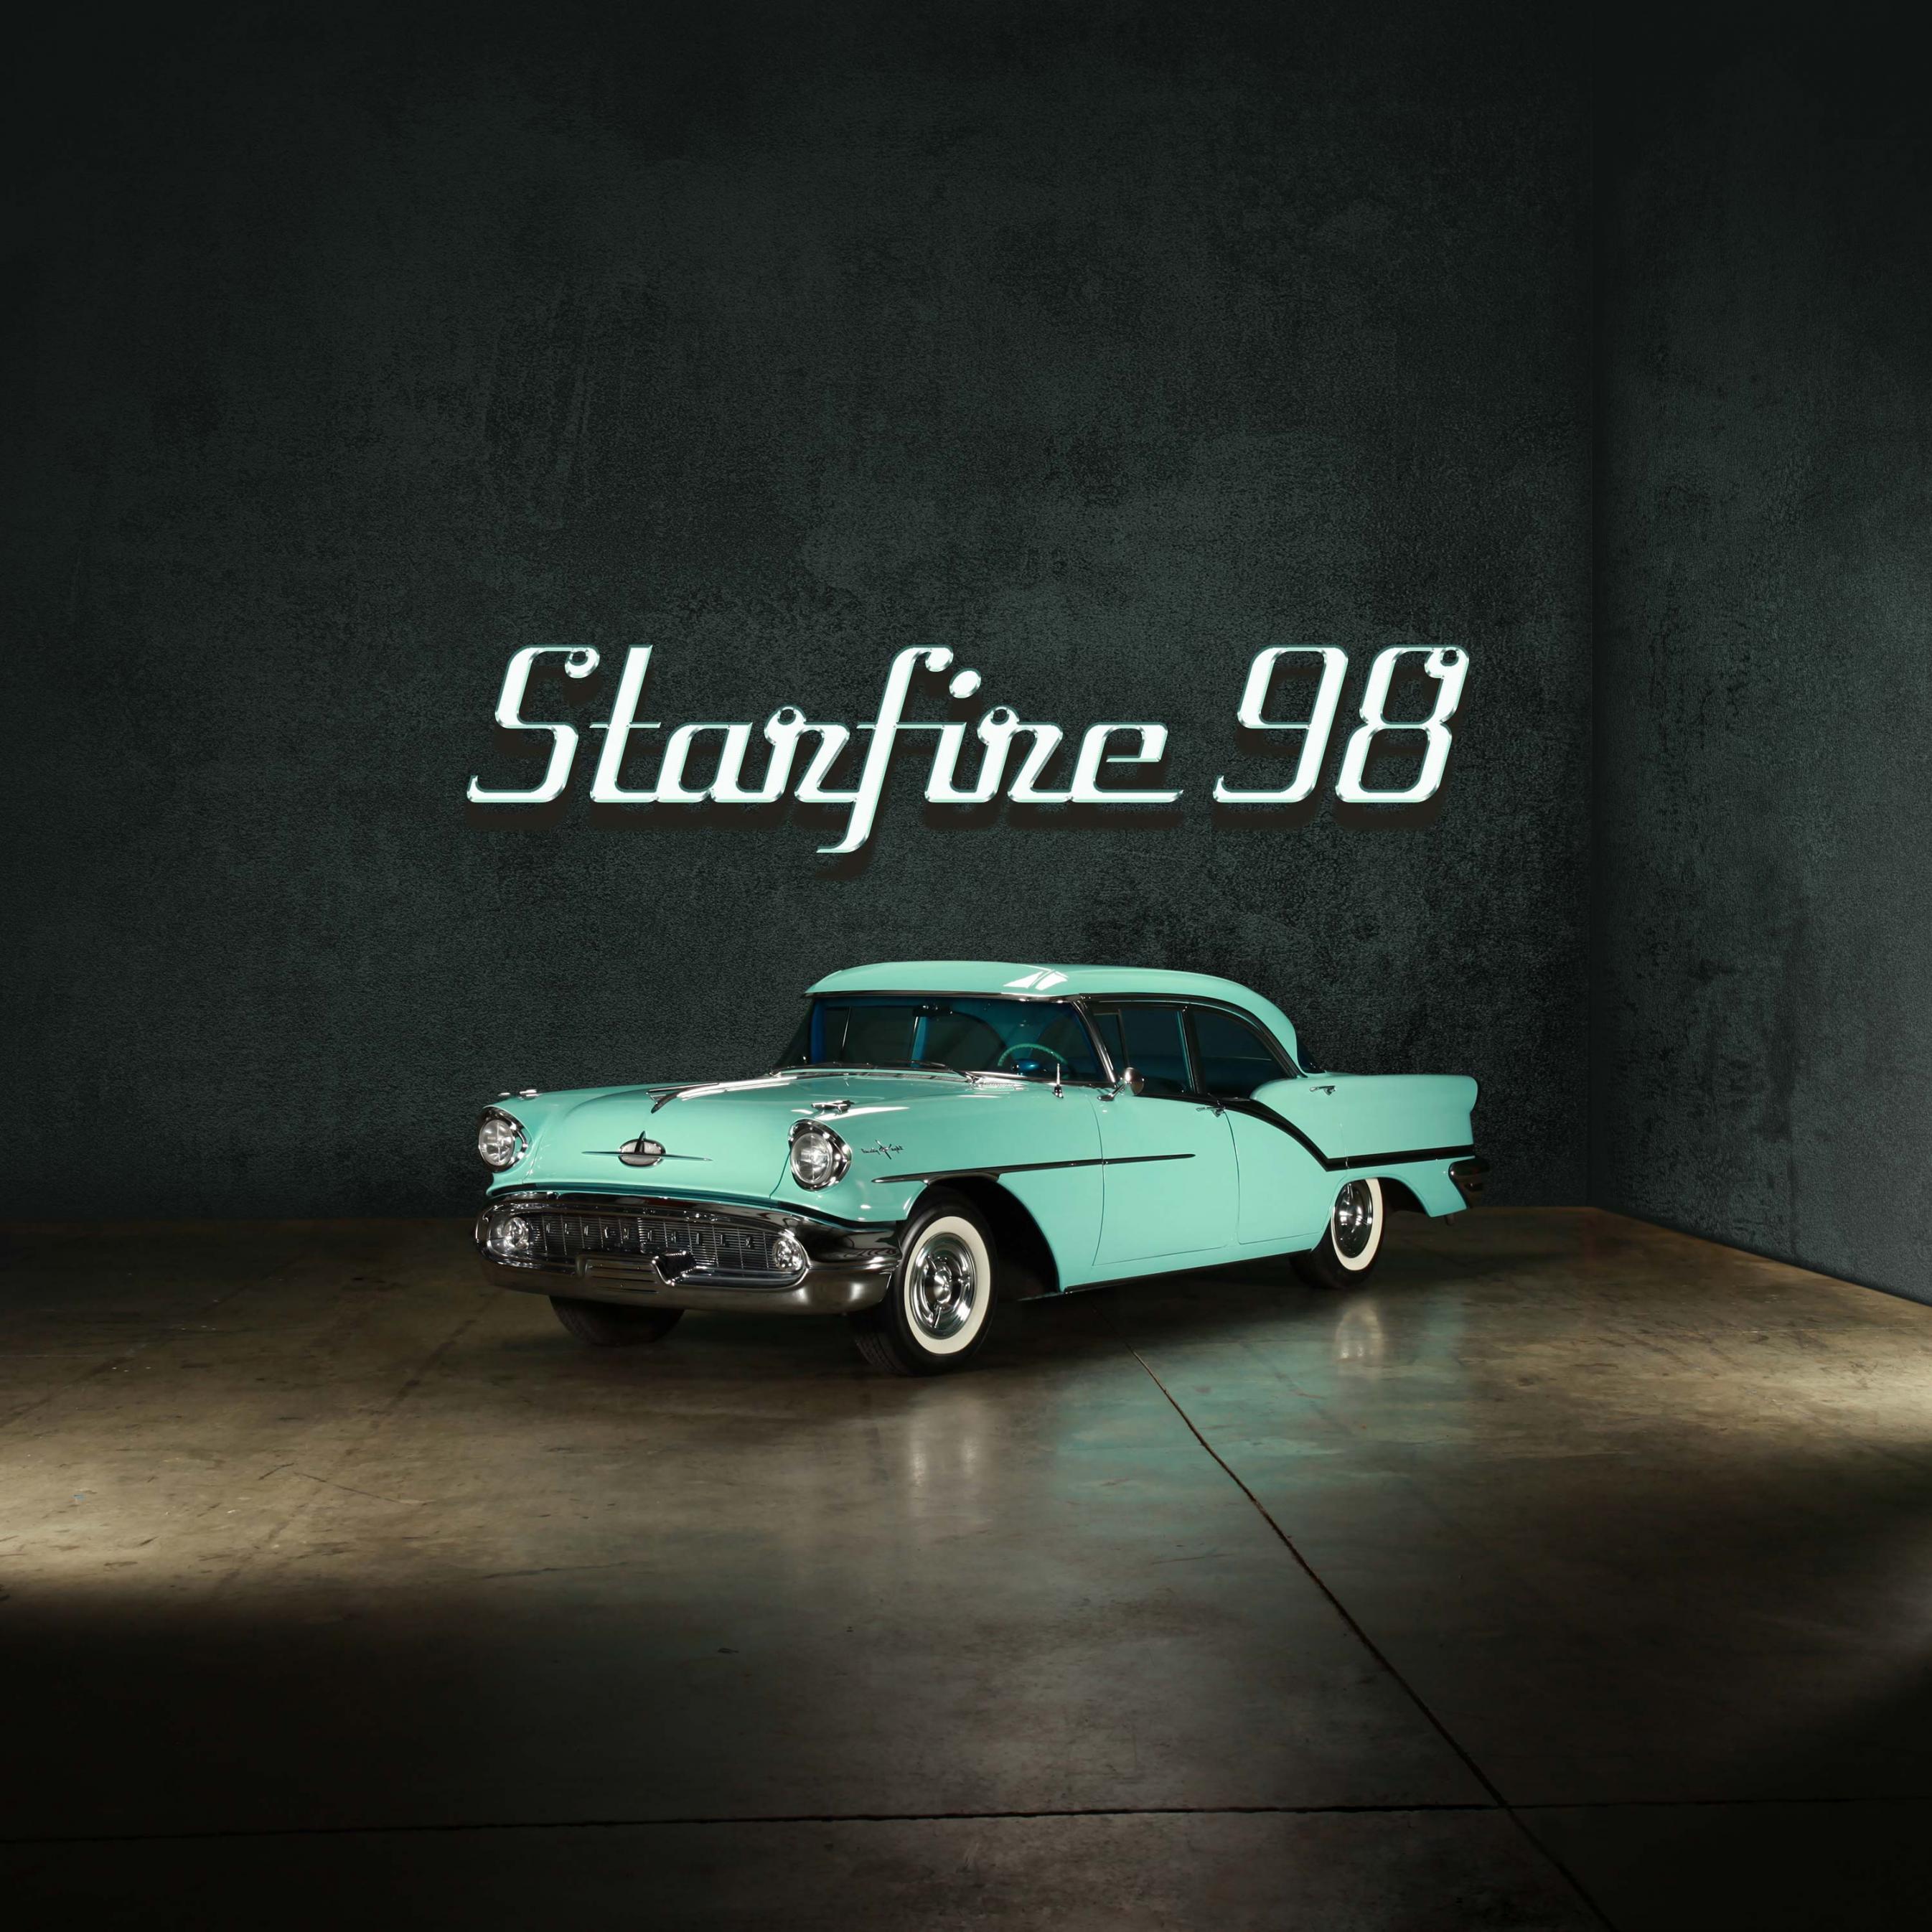 the-1957-oldsmobile-starfire-98